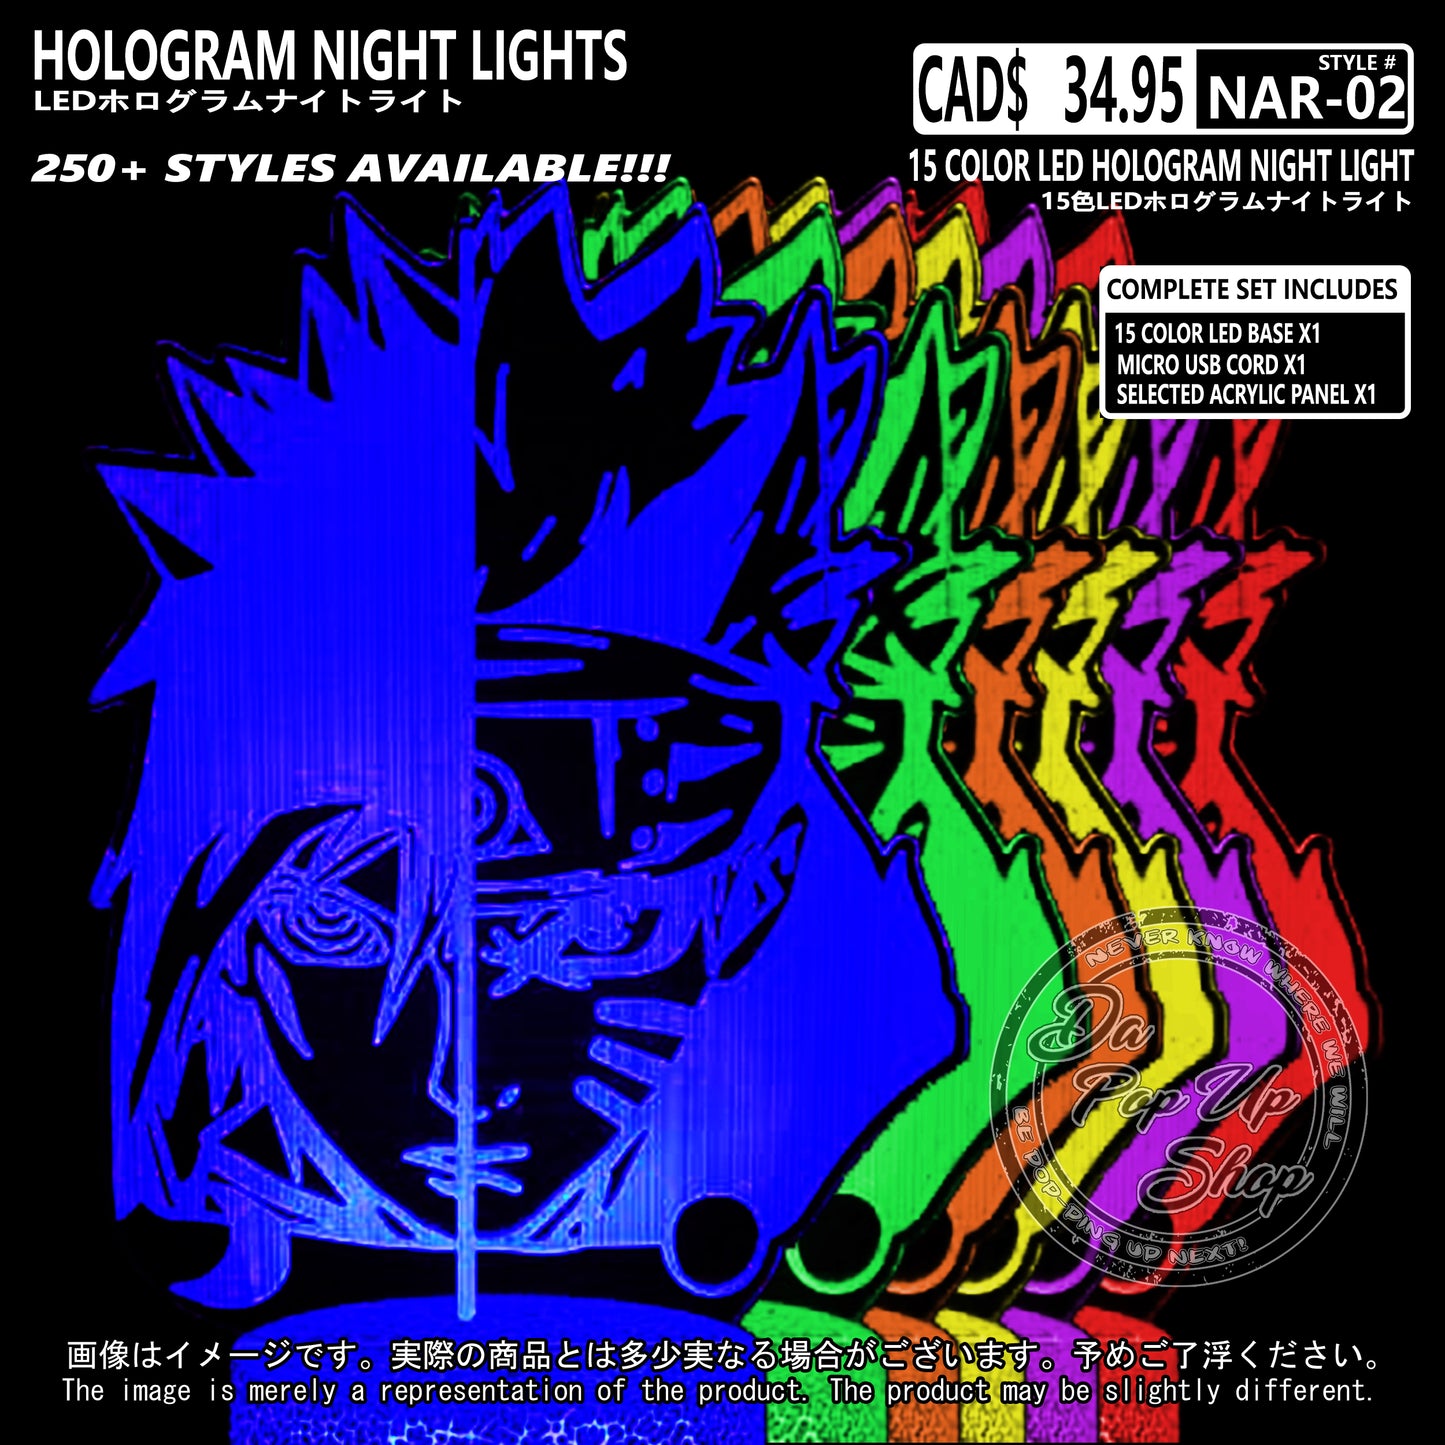 (NAR-02) Naruto Hologram LED Night Light